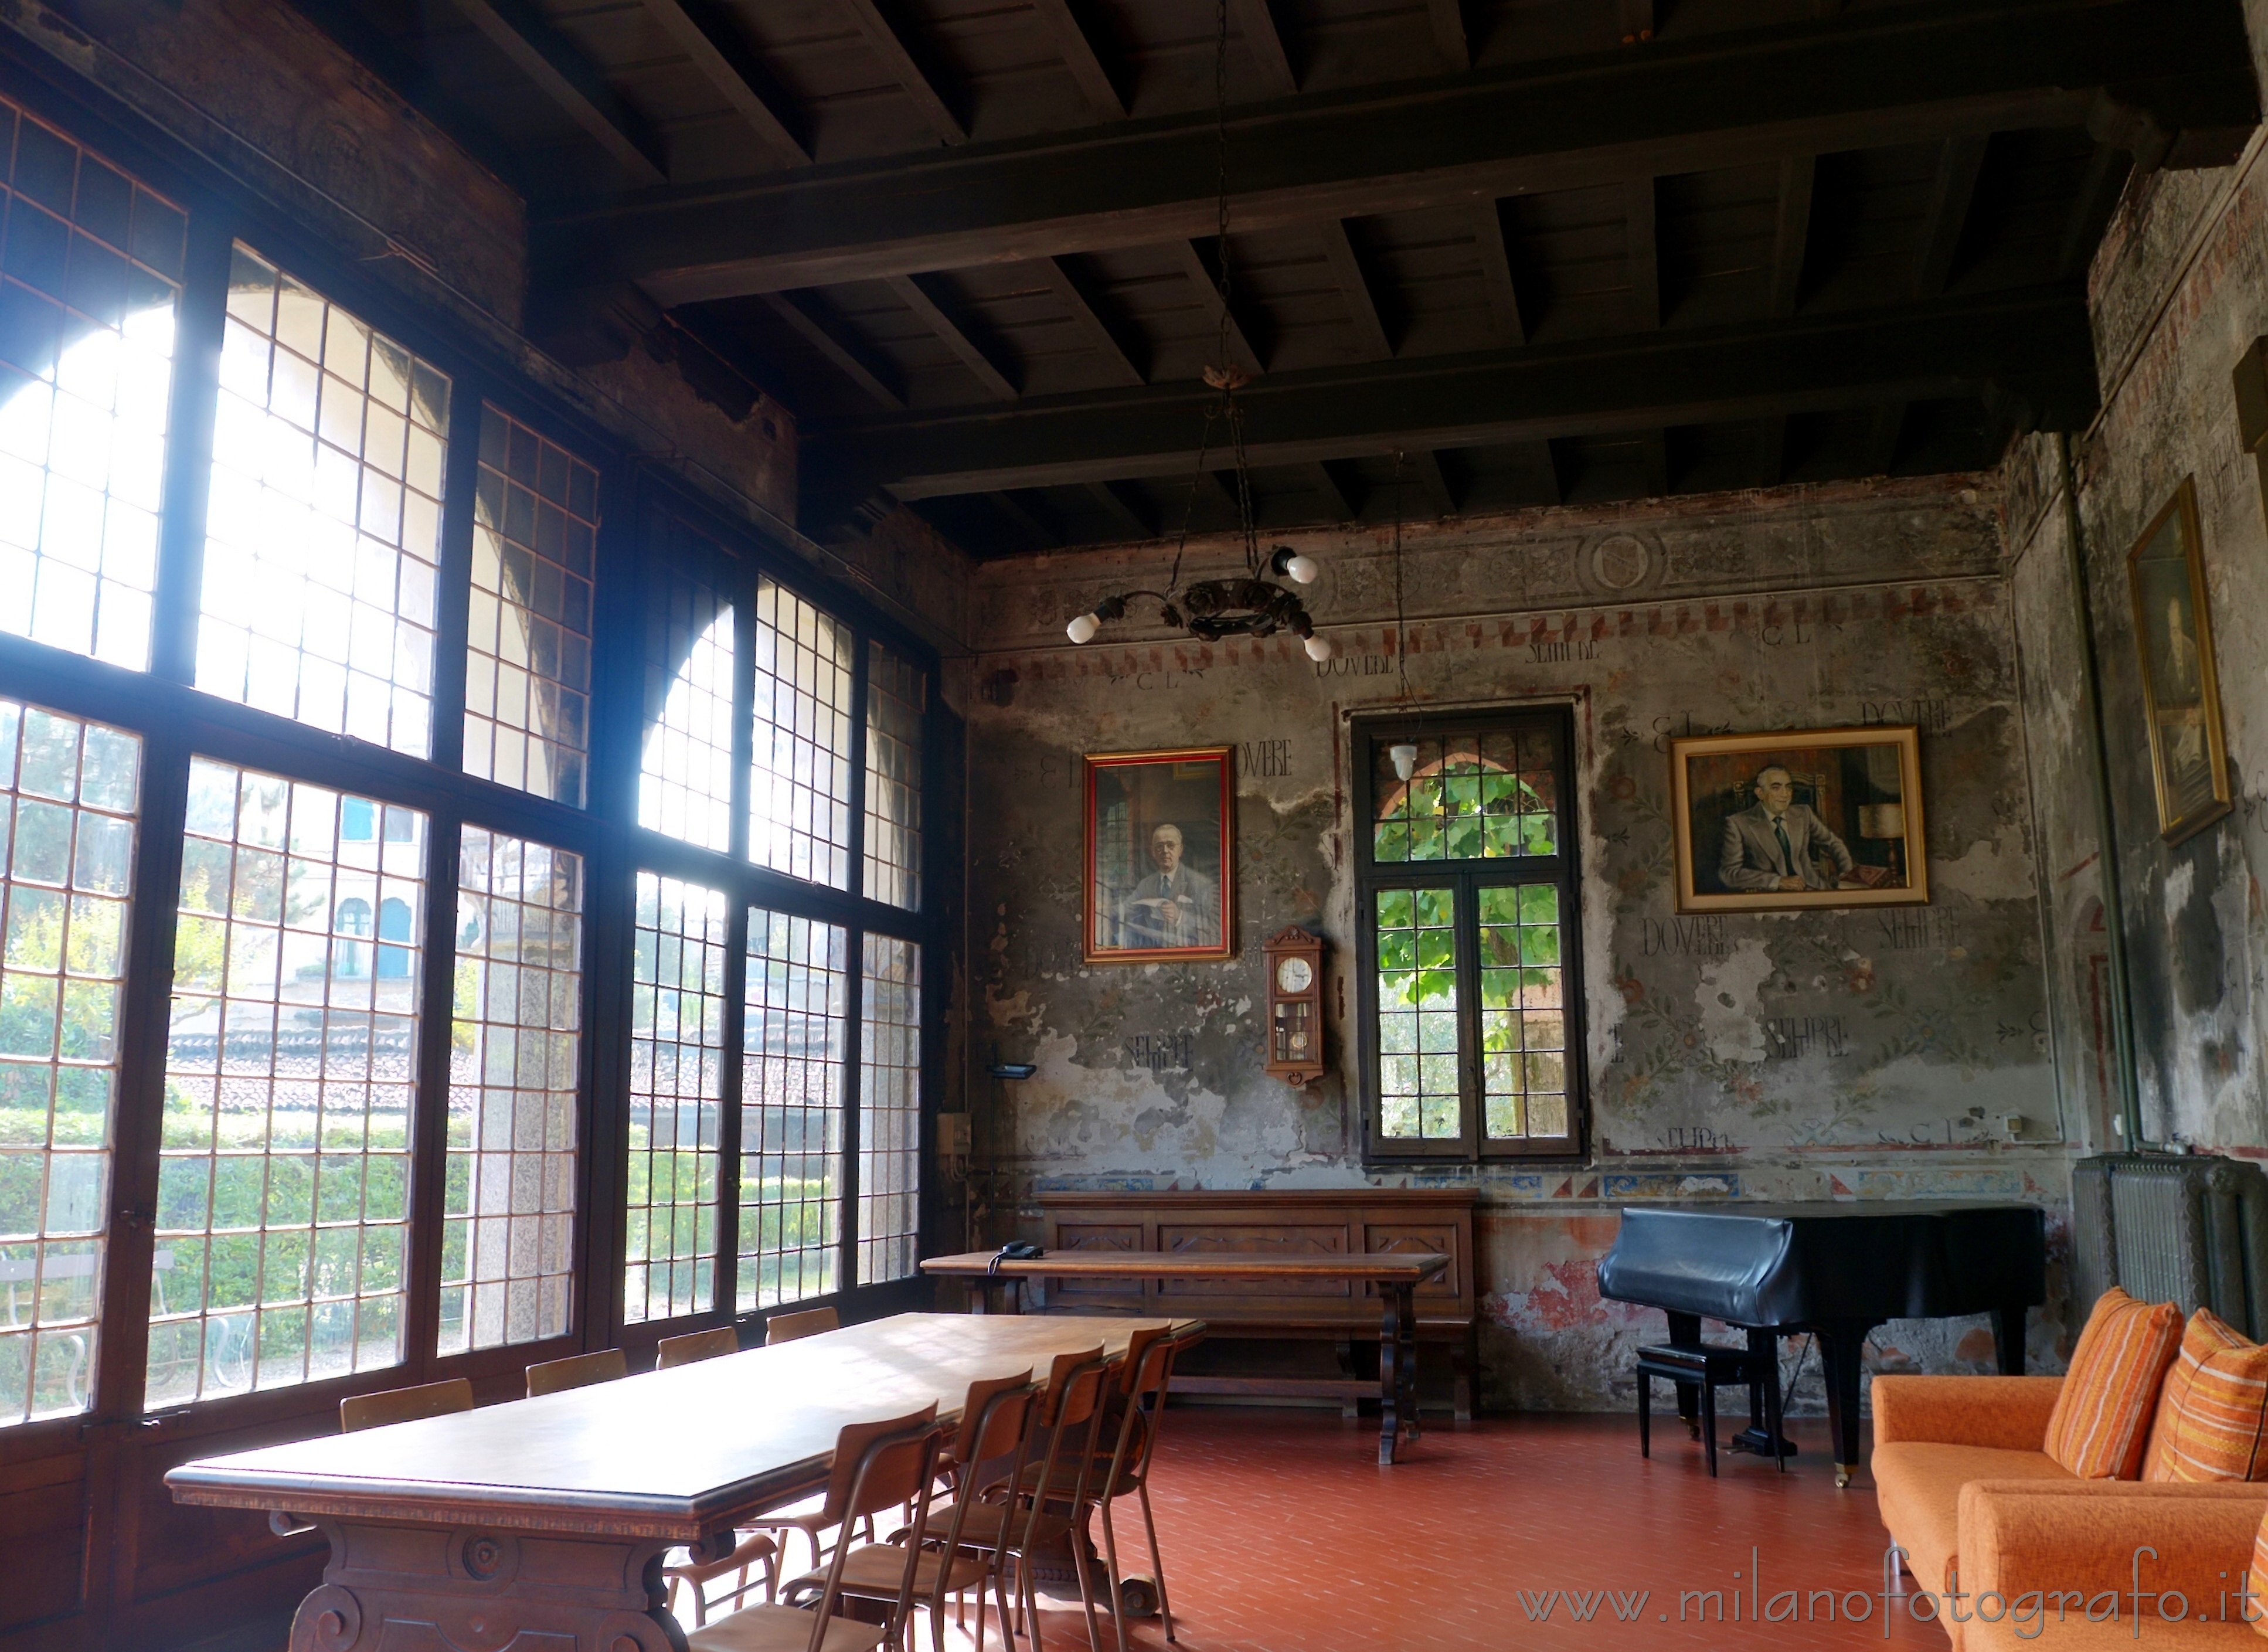 Milan (Italy): Main room of Villa Mirabello - Milan (Italy)